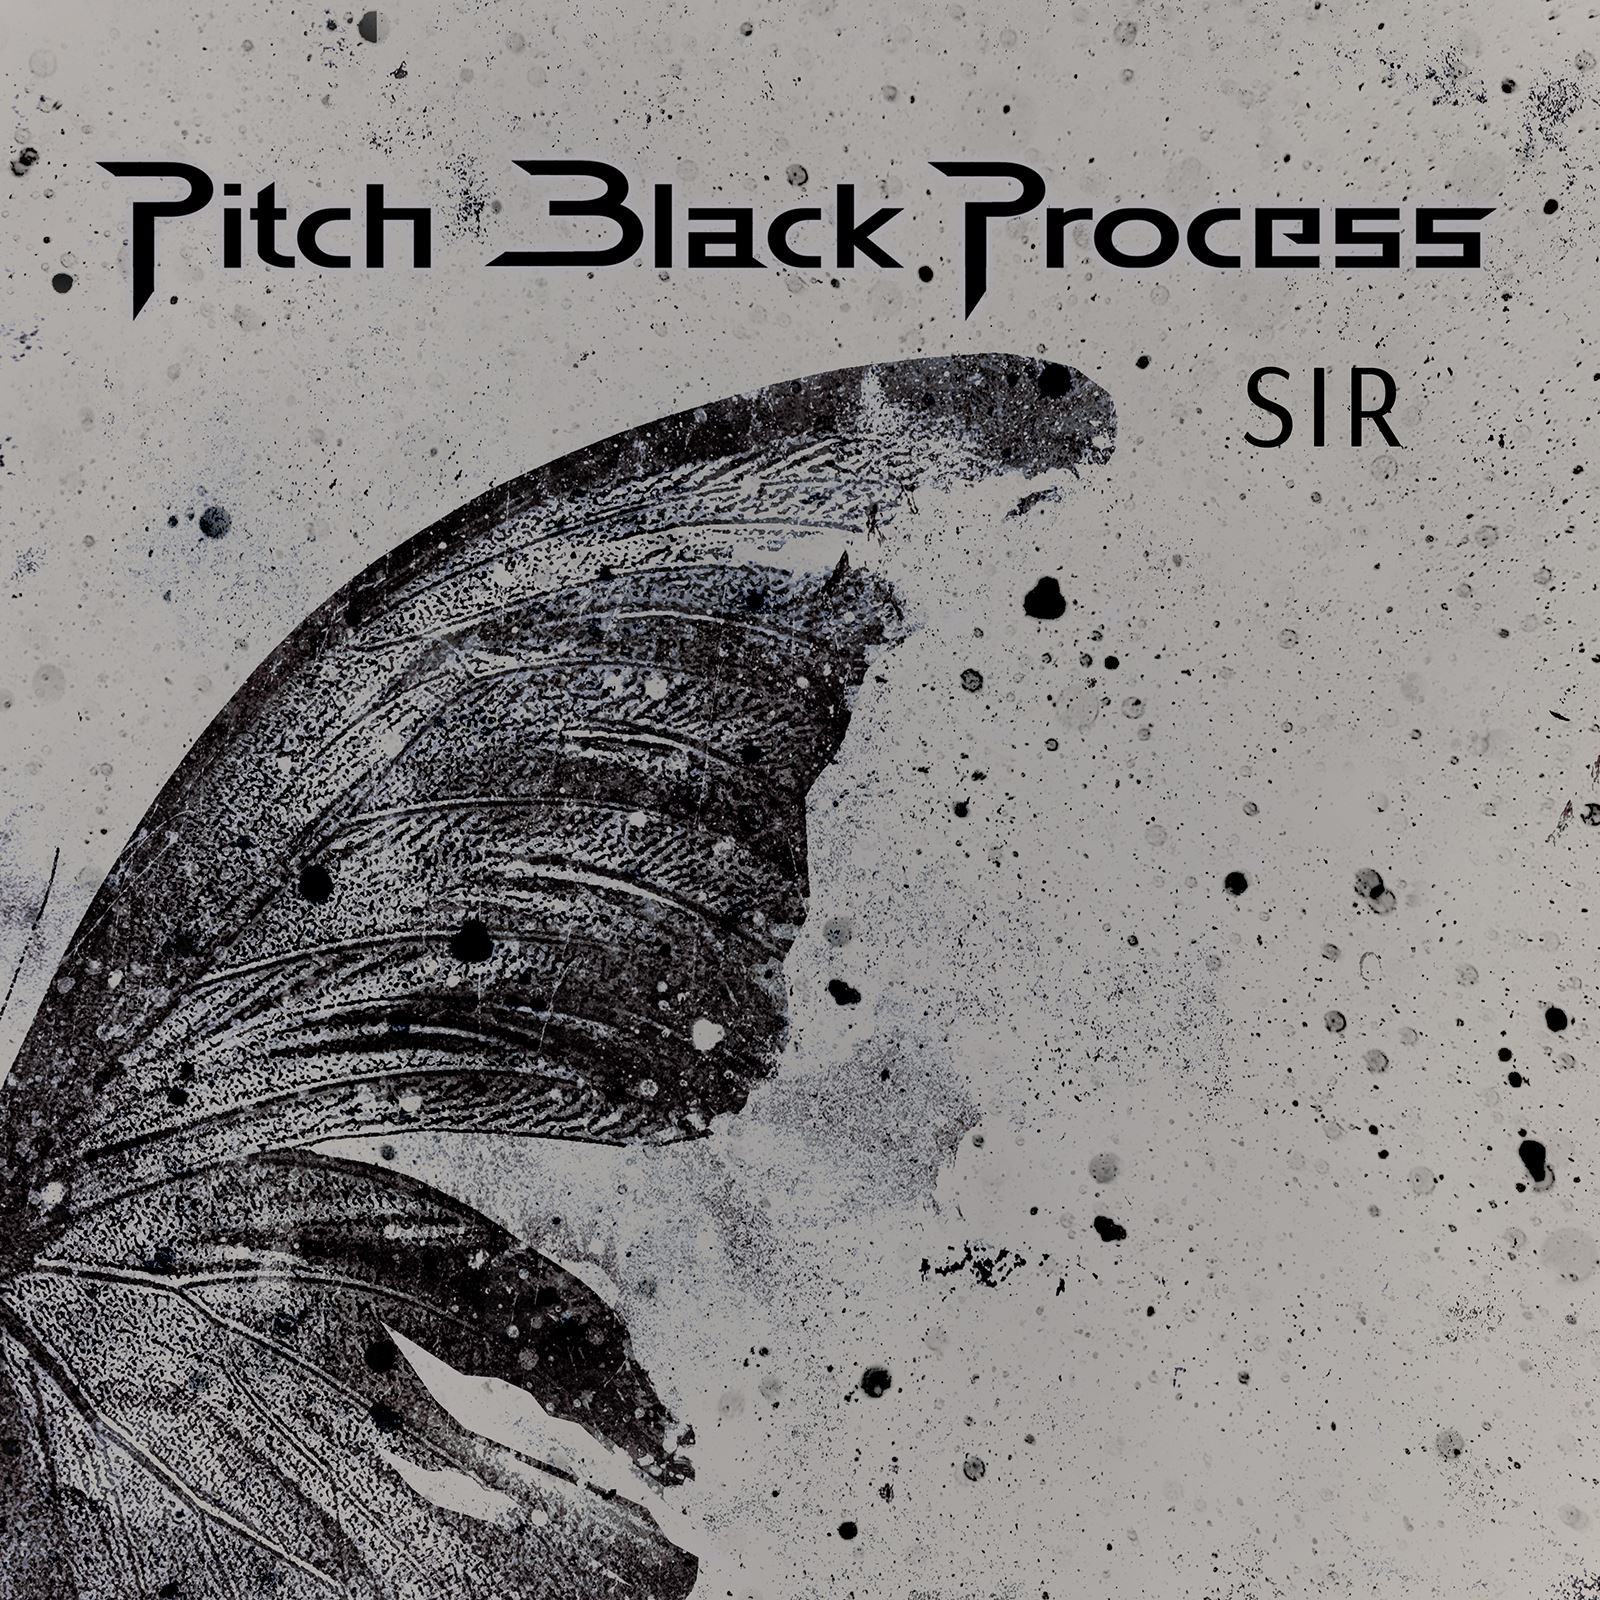 pitch black process_sir.jpg